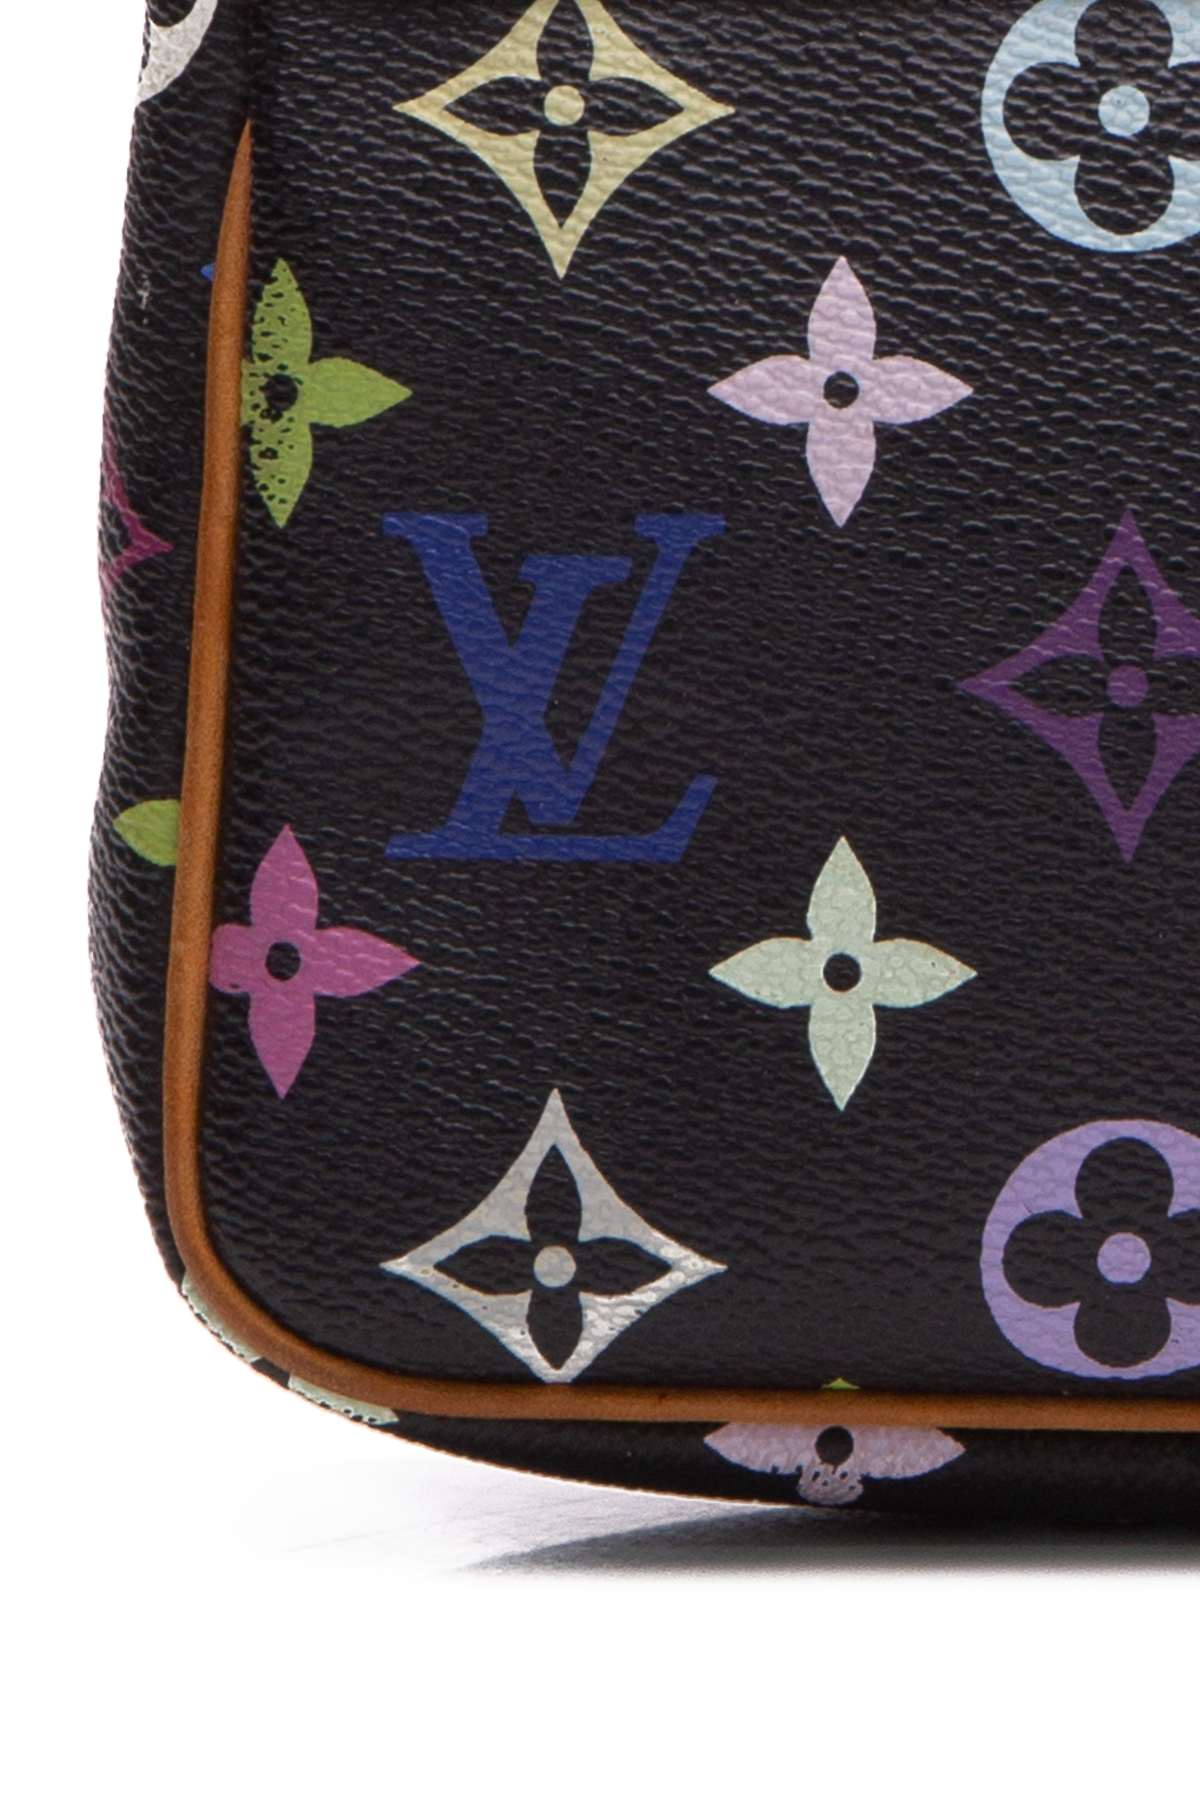 Louis Vuitton Monogram Multicolor Pochette Accessories